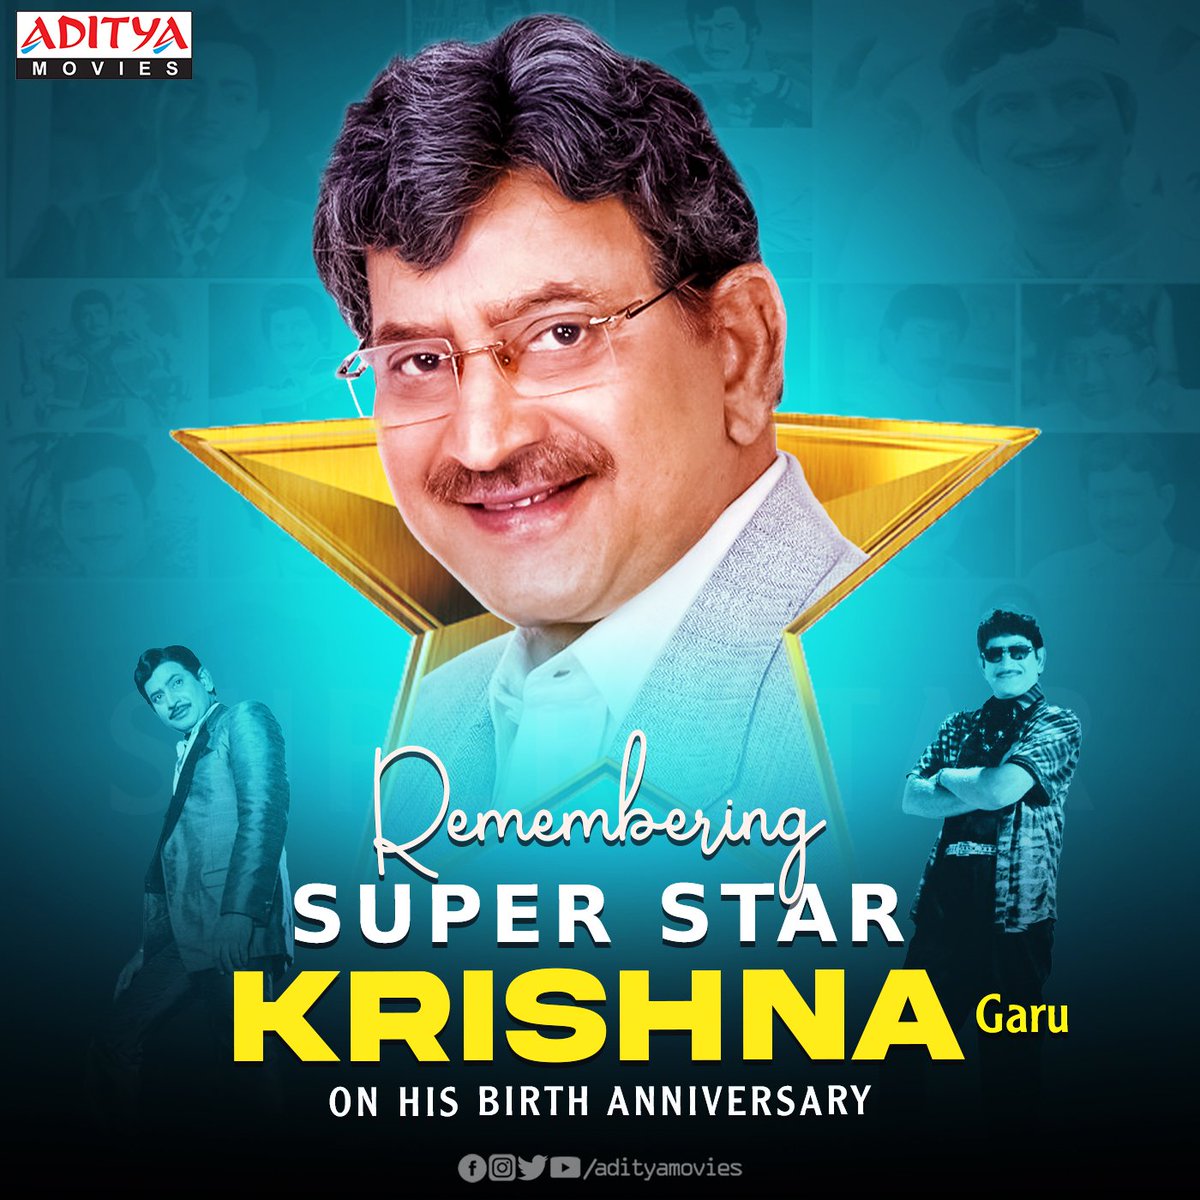 Remembering Super Star Krishna Garu on his Birth Anniversary!
#SuperstarKrishna #RememberingKrishna Garu #AdityaMovies